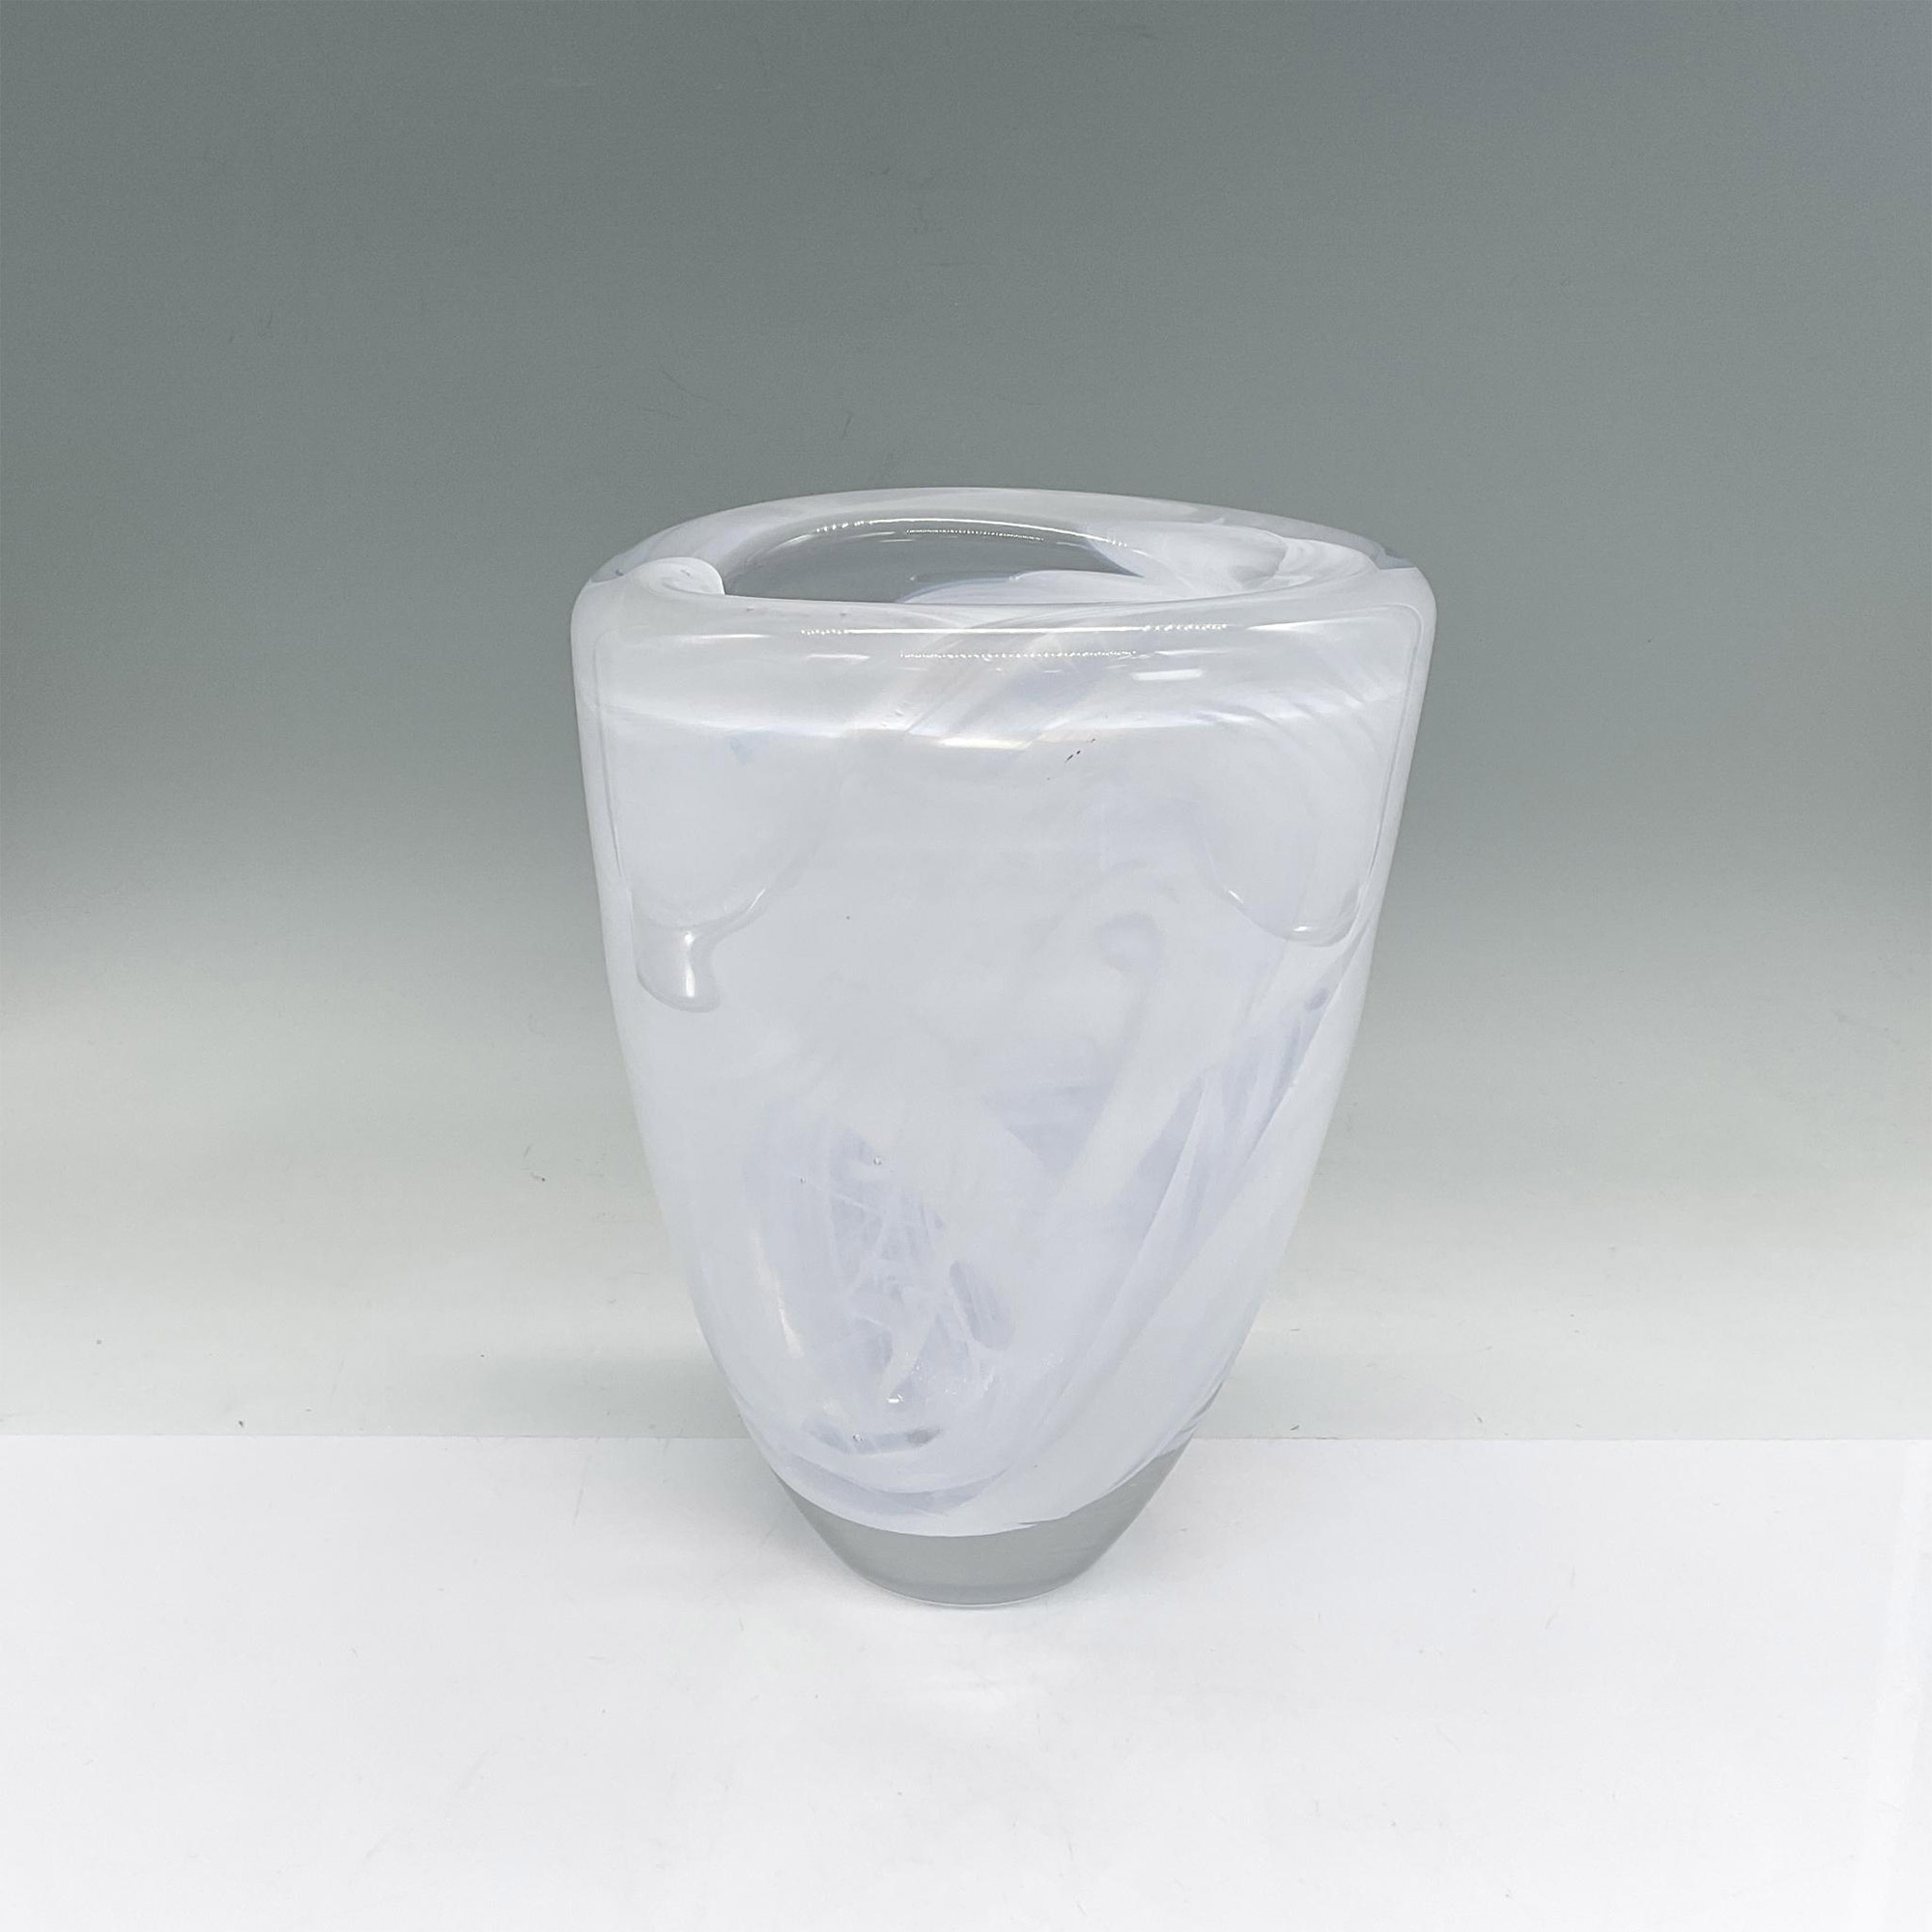 Kosta Boda Glass Vase, White Swirl - Image 2 of 3